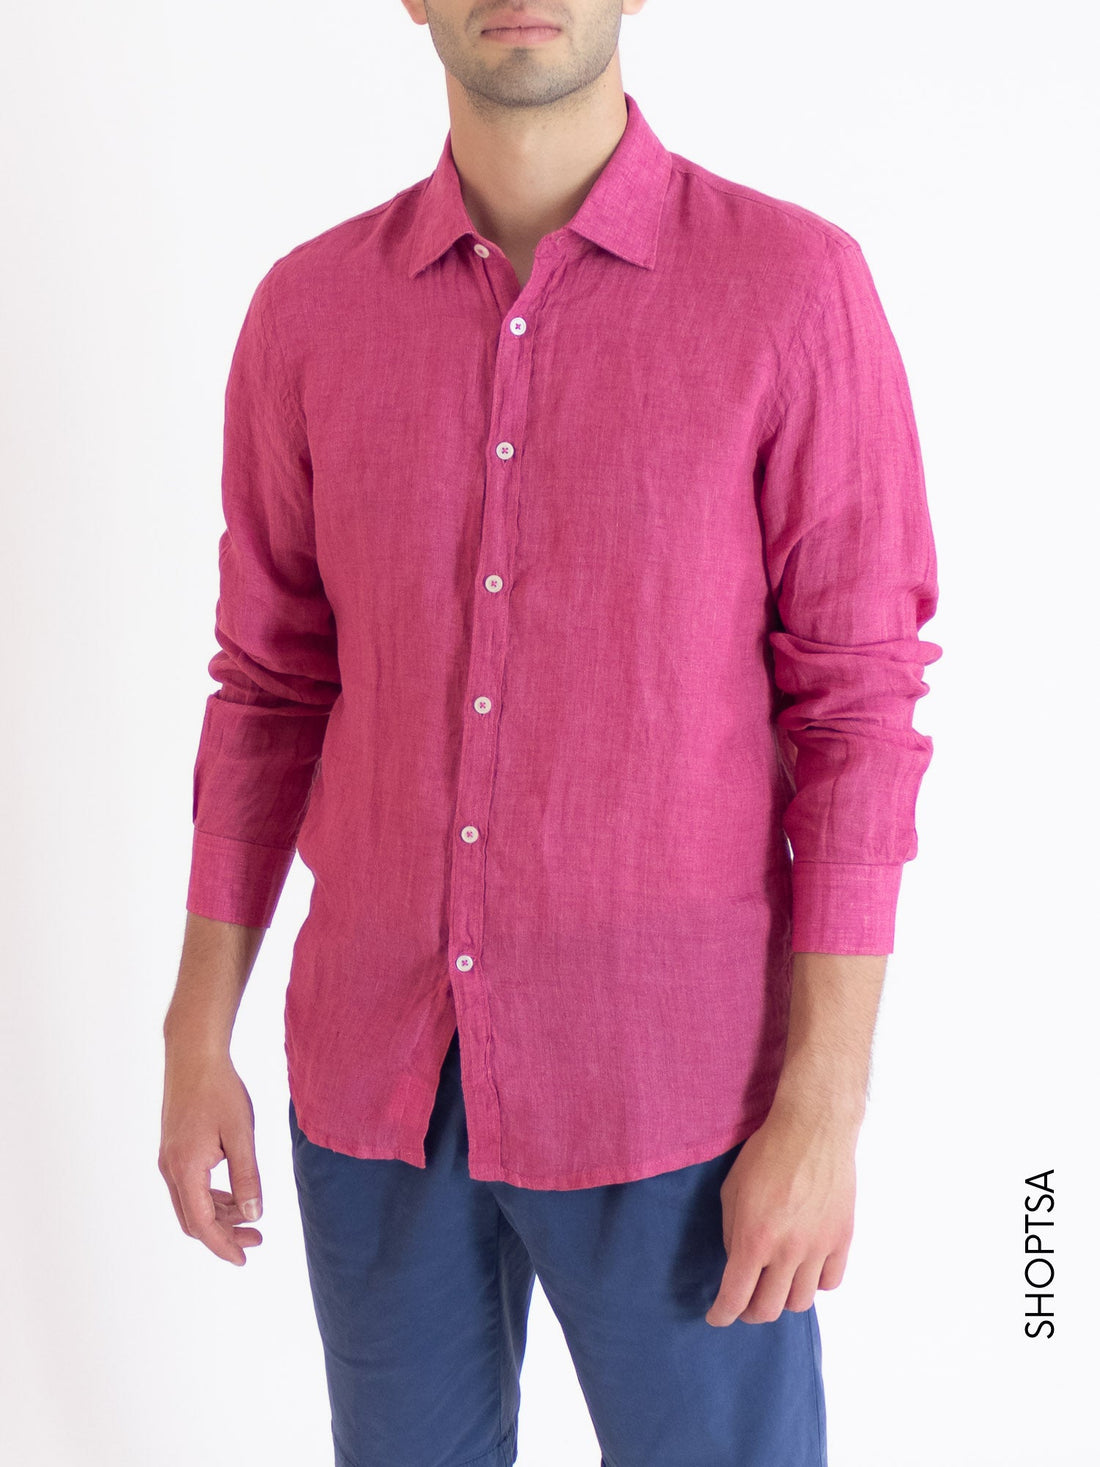 Colored linen shirt - Cliver Jeans